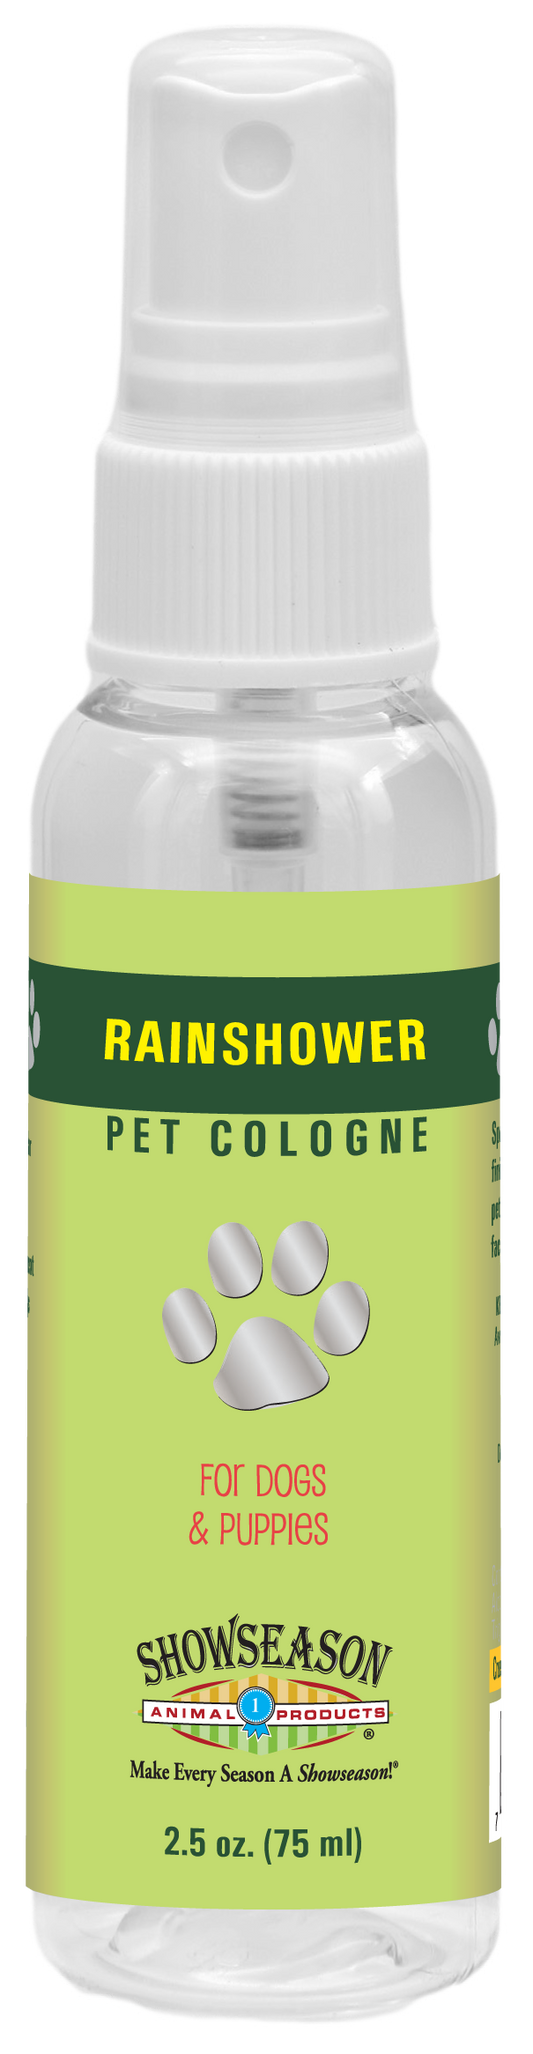 Rainshower Pet Cologne | Showseason®